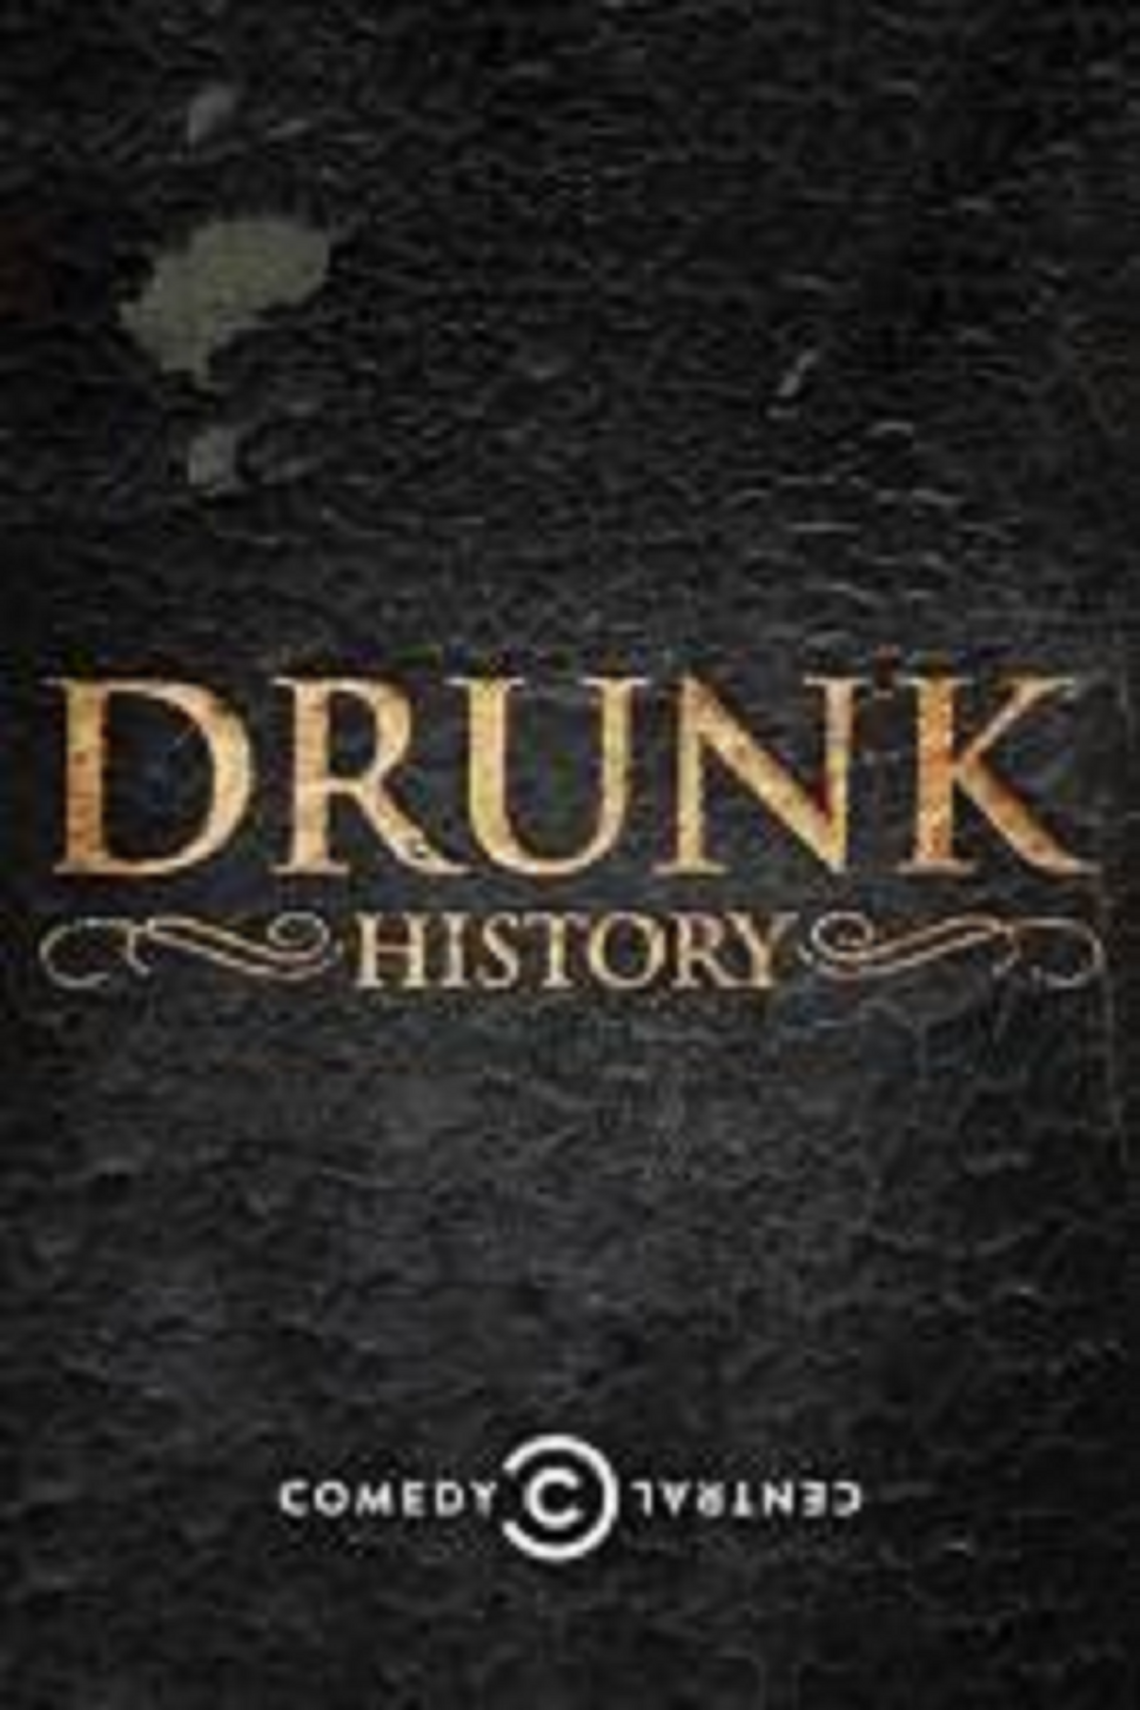 TV Reviews -- "Drunk History"